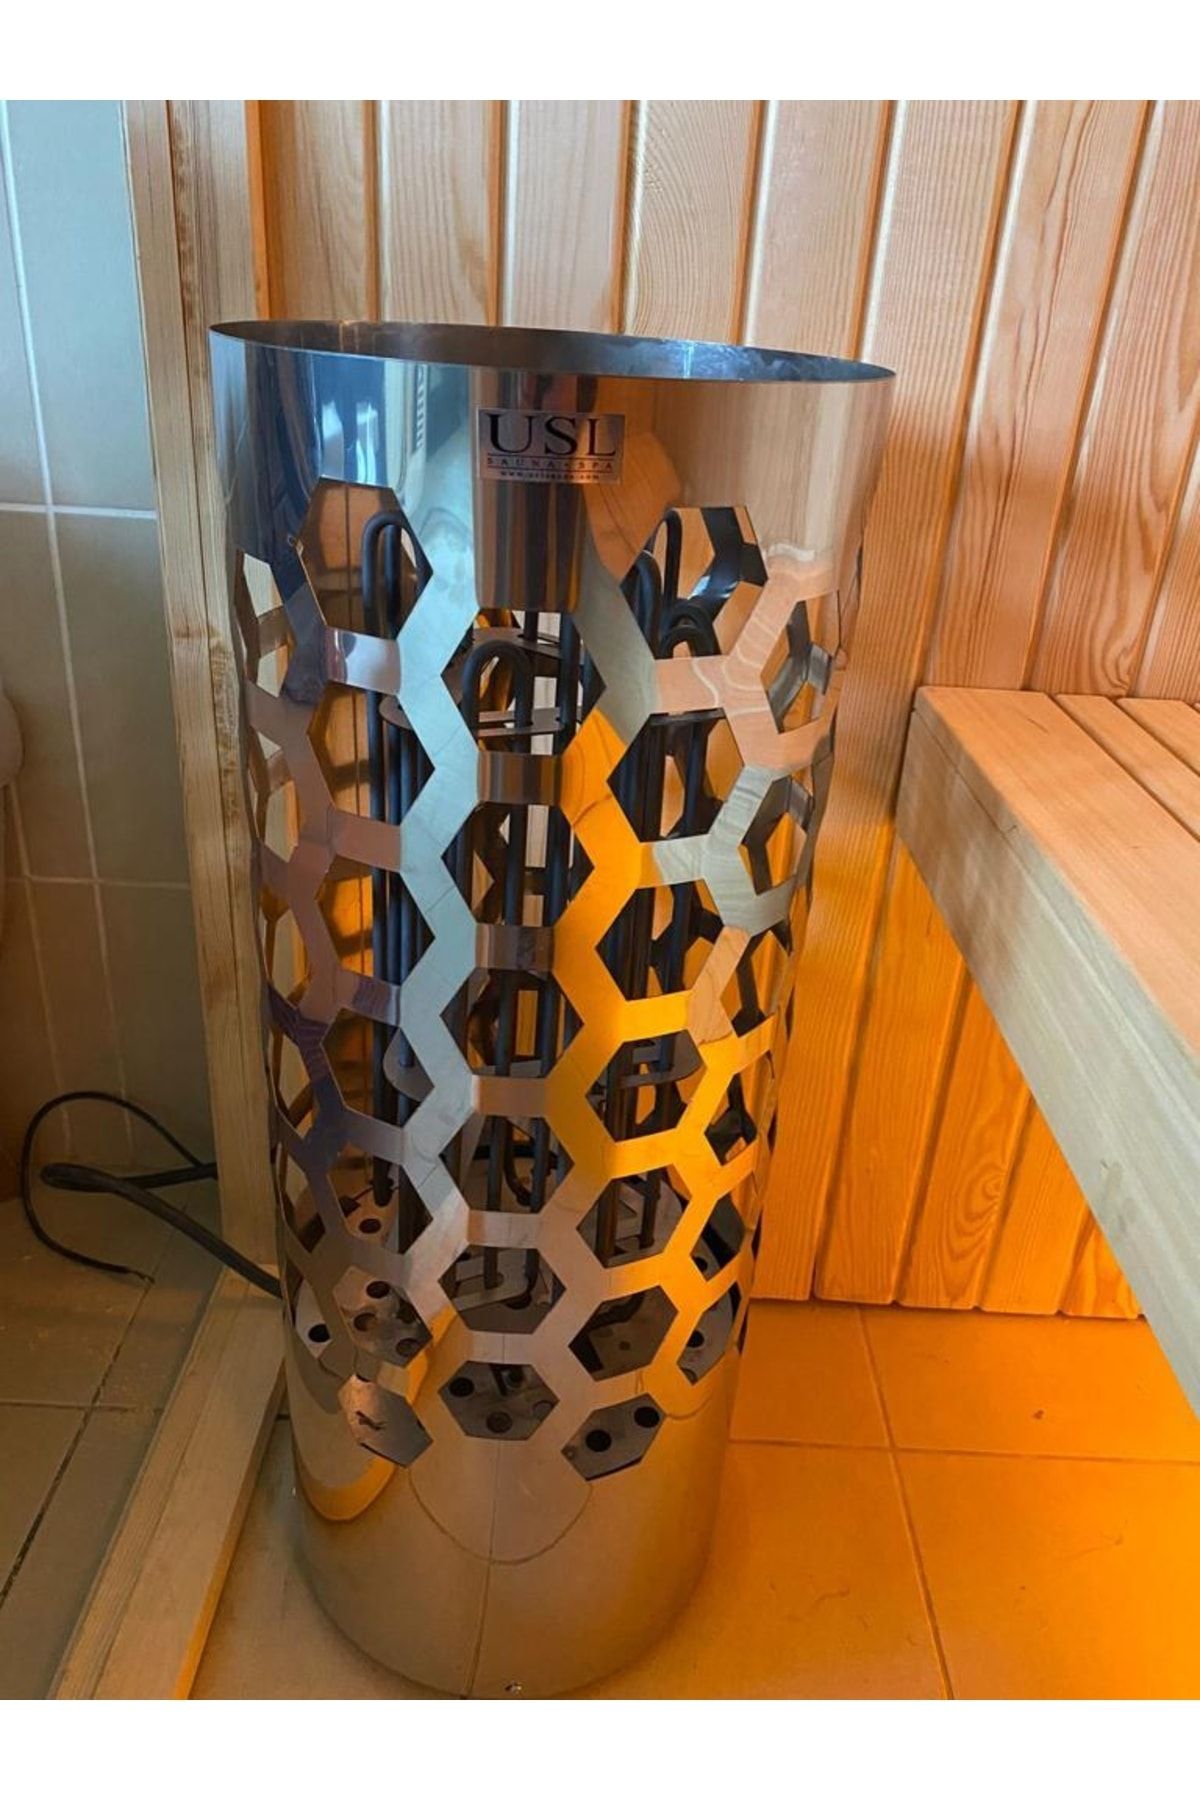 USL Yuvarlak Tasarım Sauna Sobası 6,0 Kw